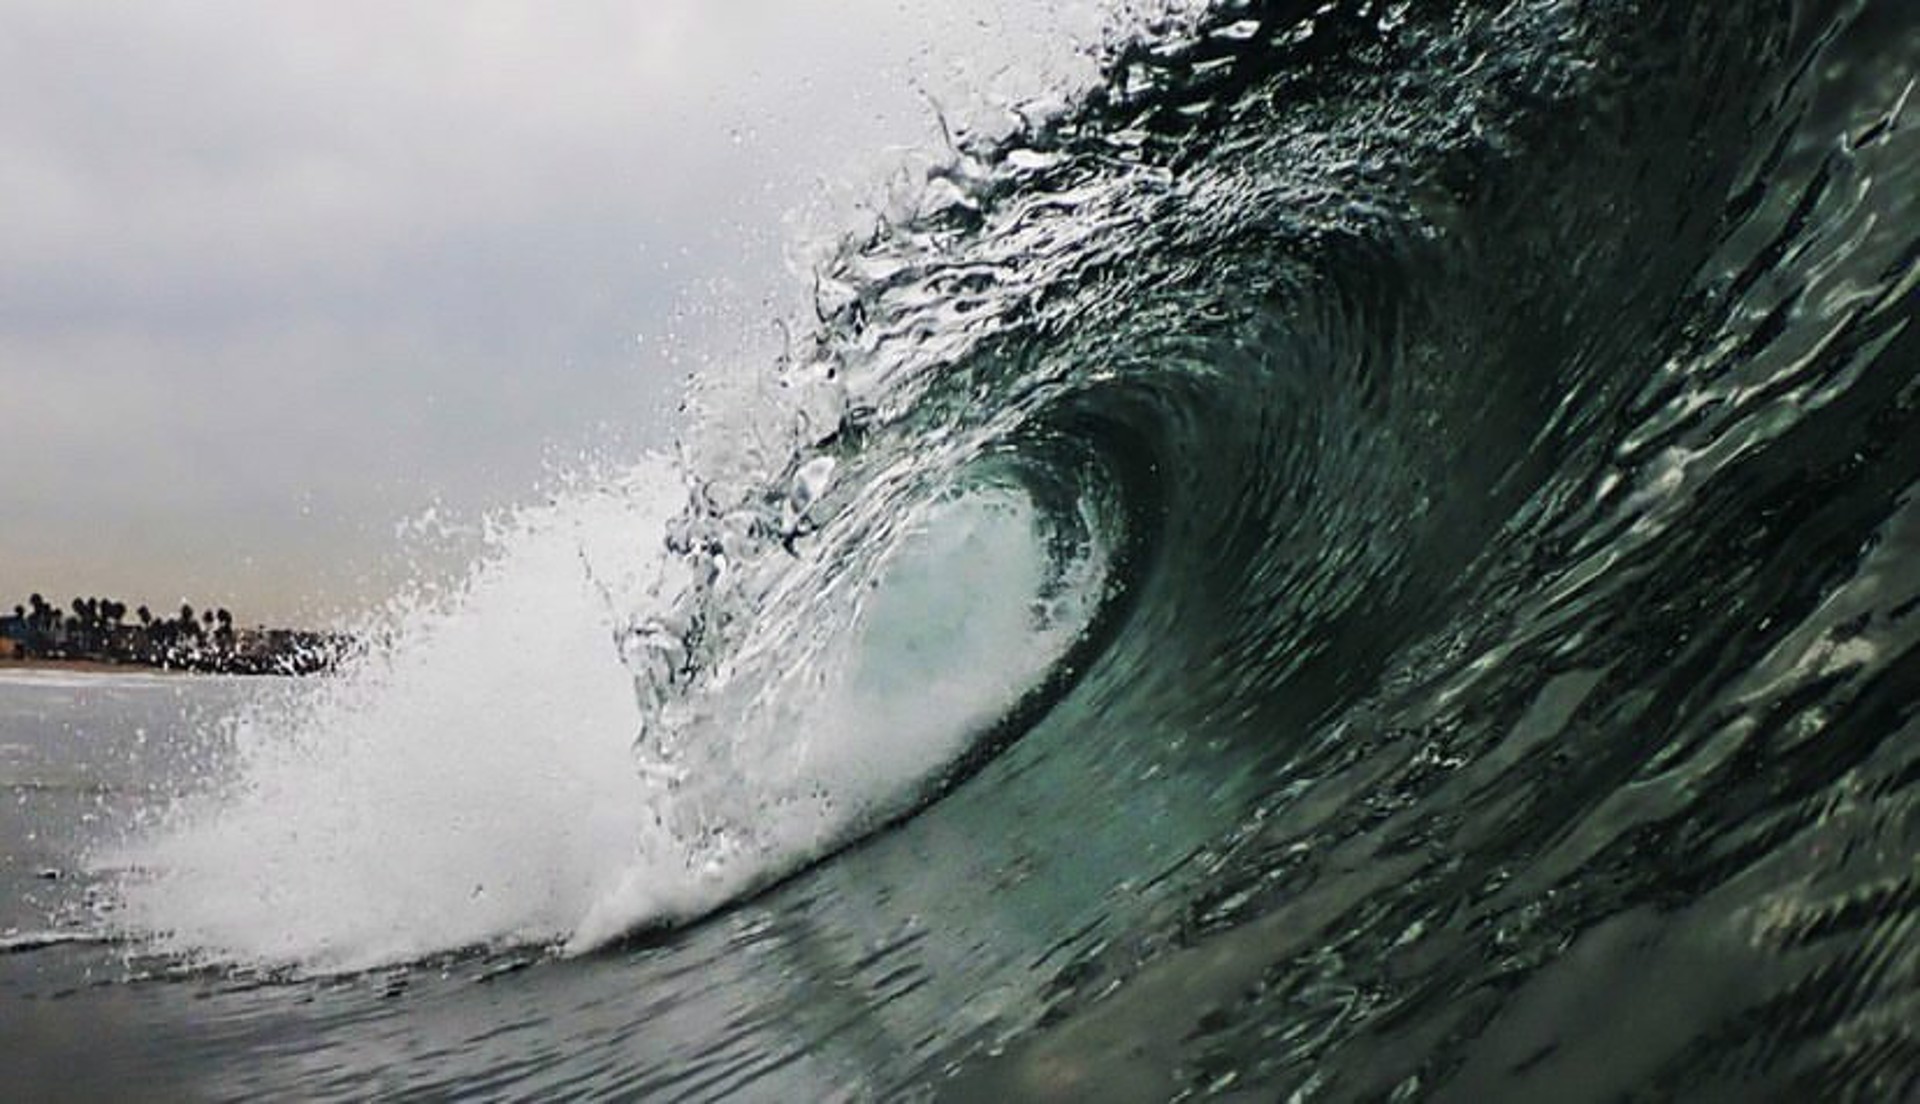 Big Wave by Mike Saijo